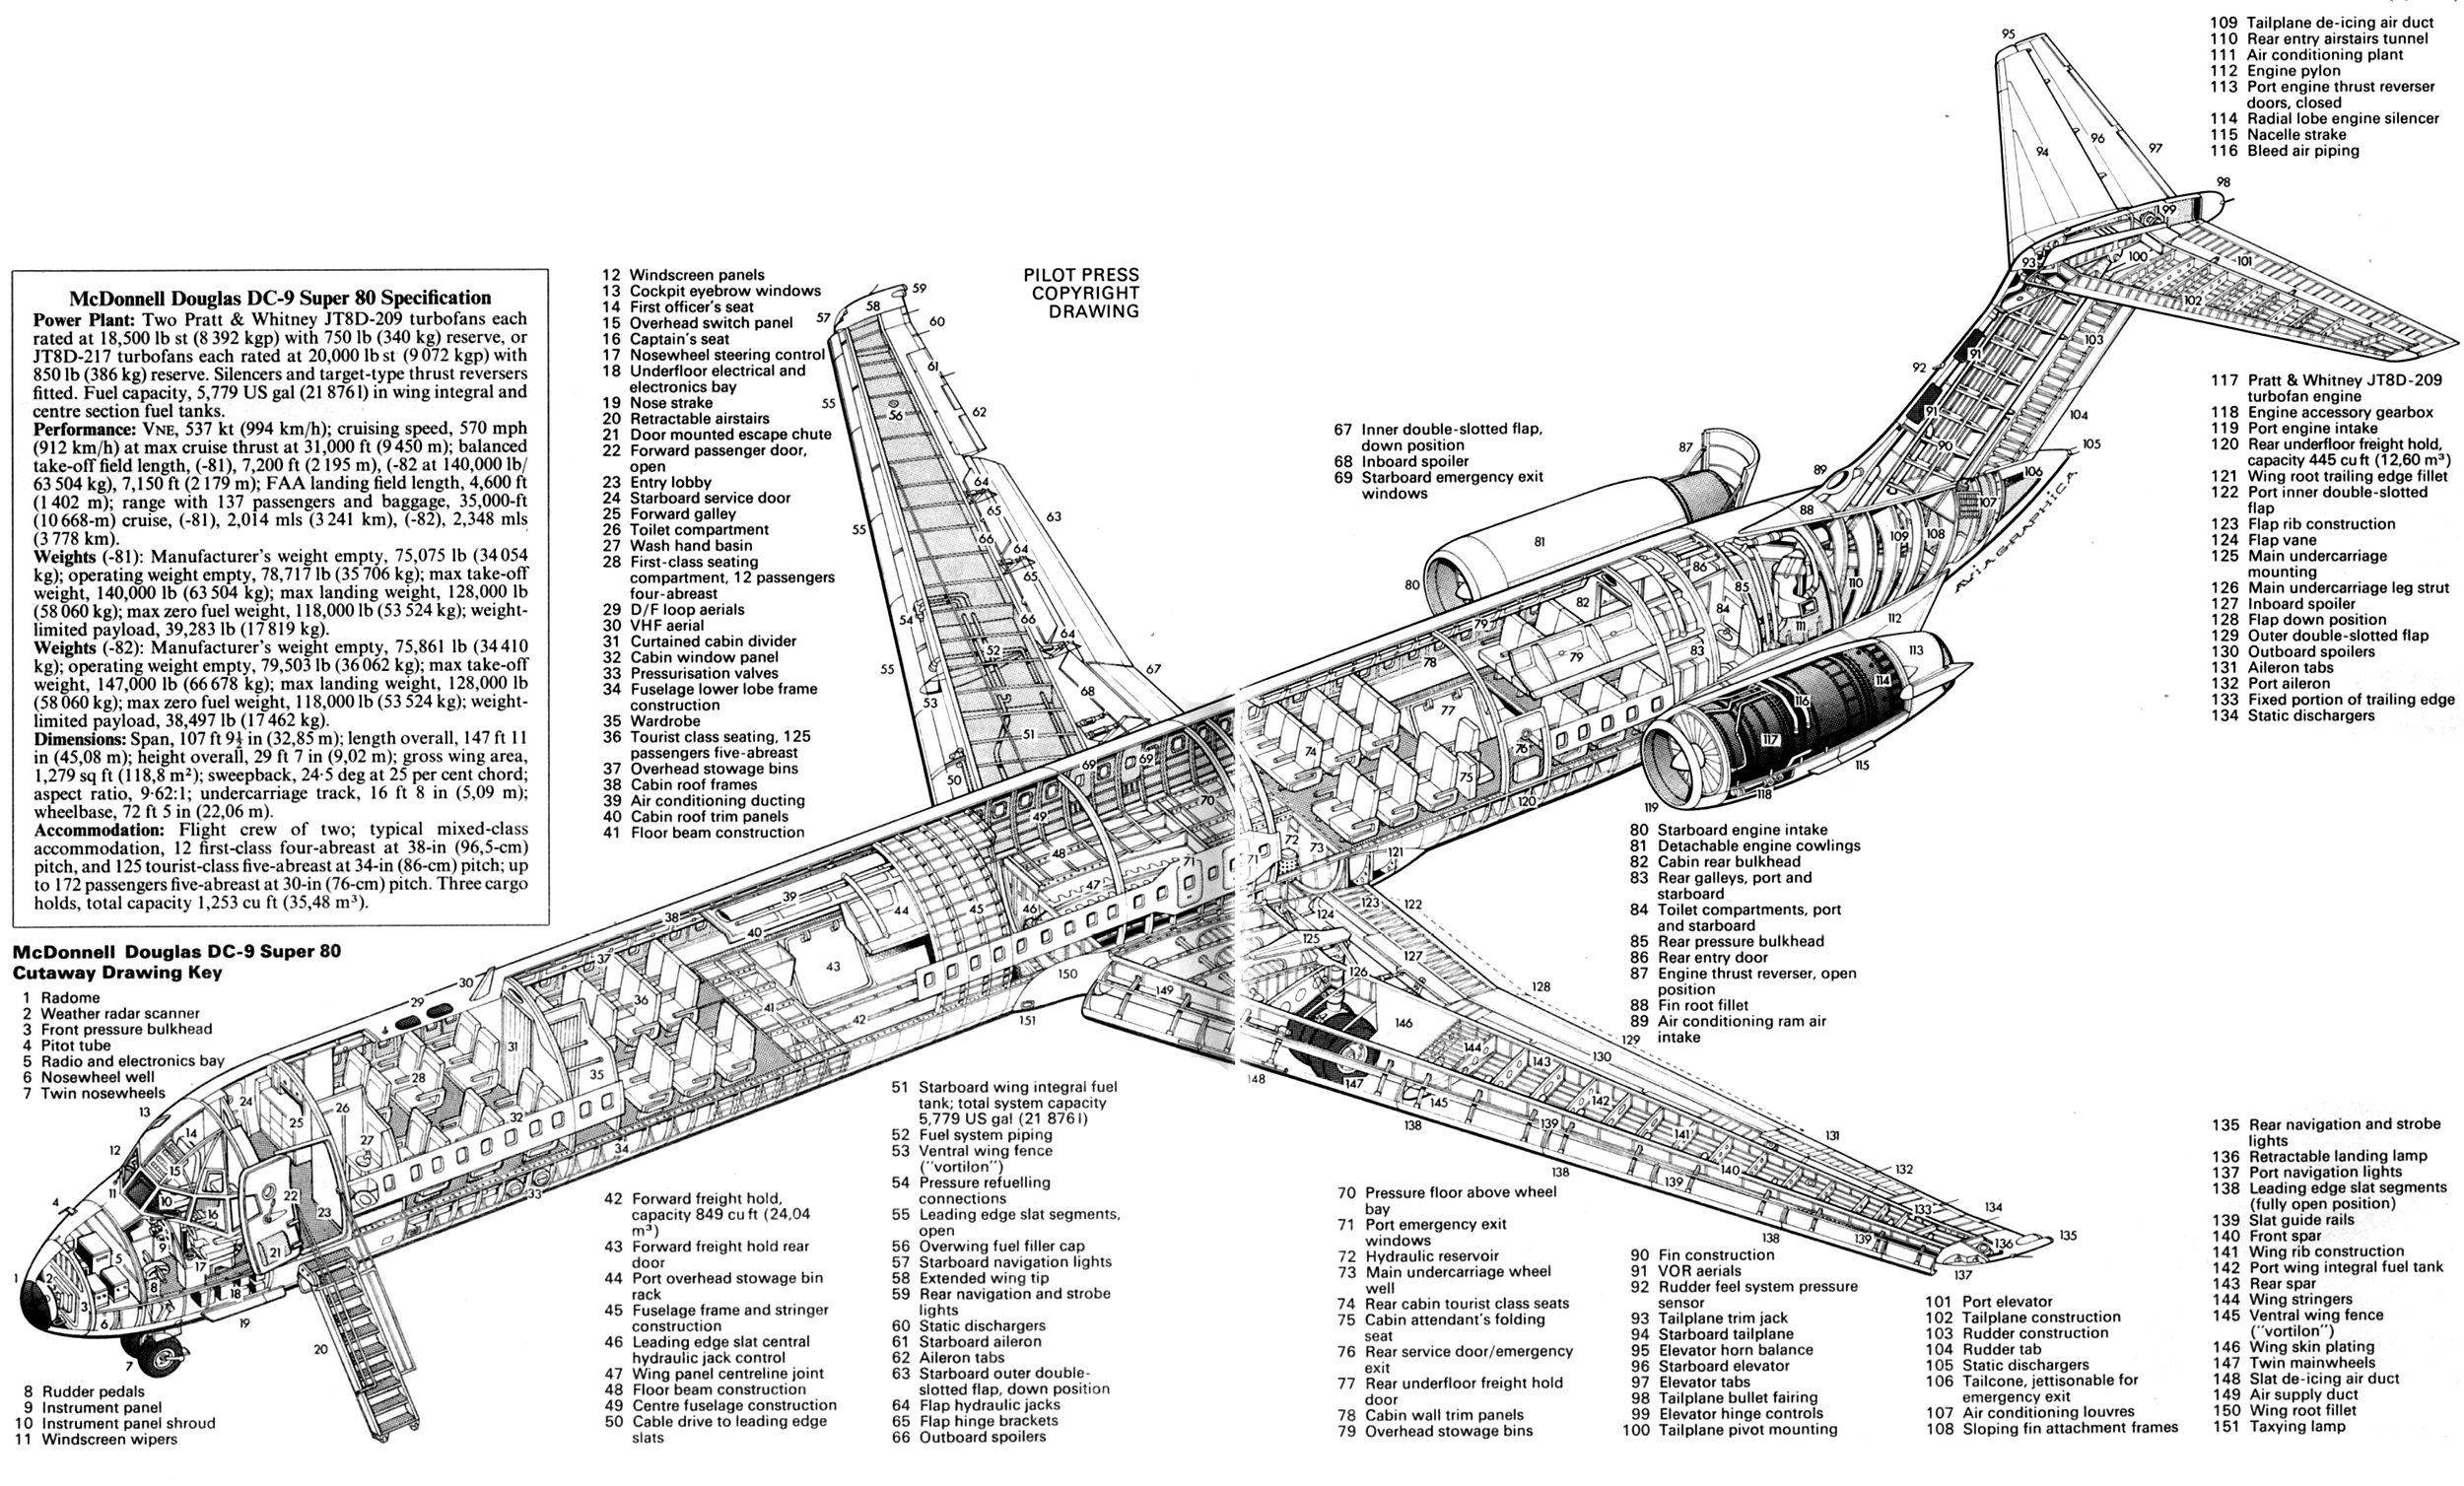 McDonnel Douglas MD-83 cutaway drawing